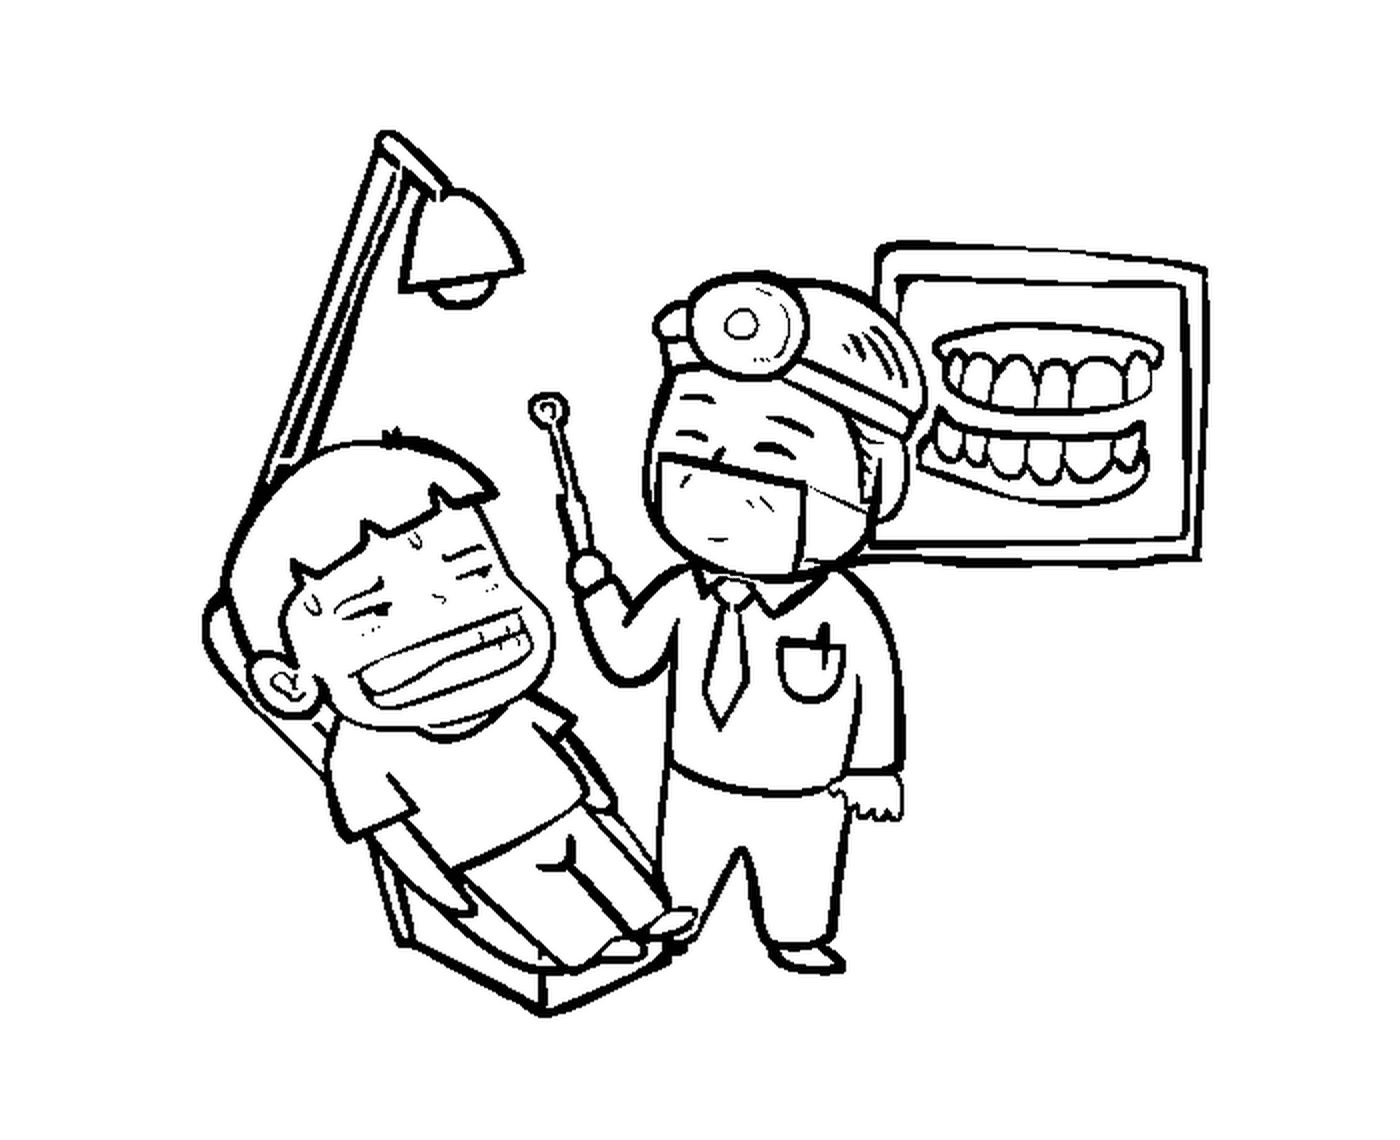  Ребёнок у стоматолога 